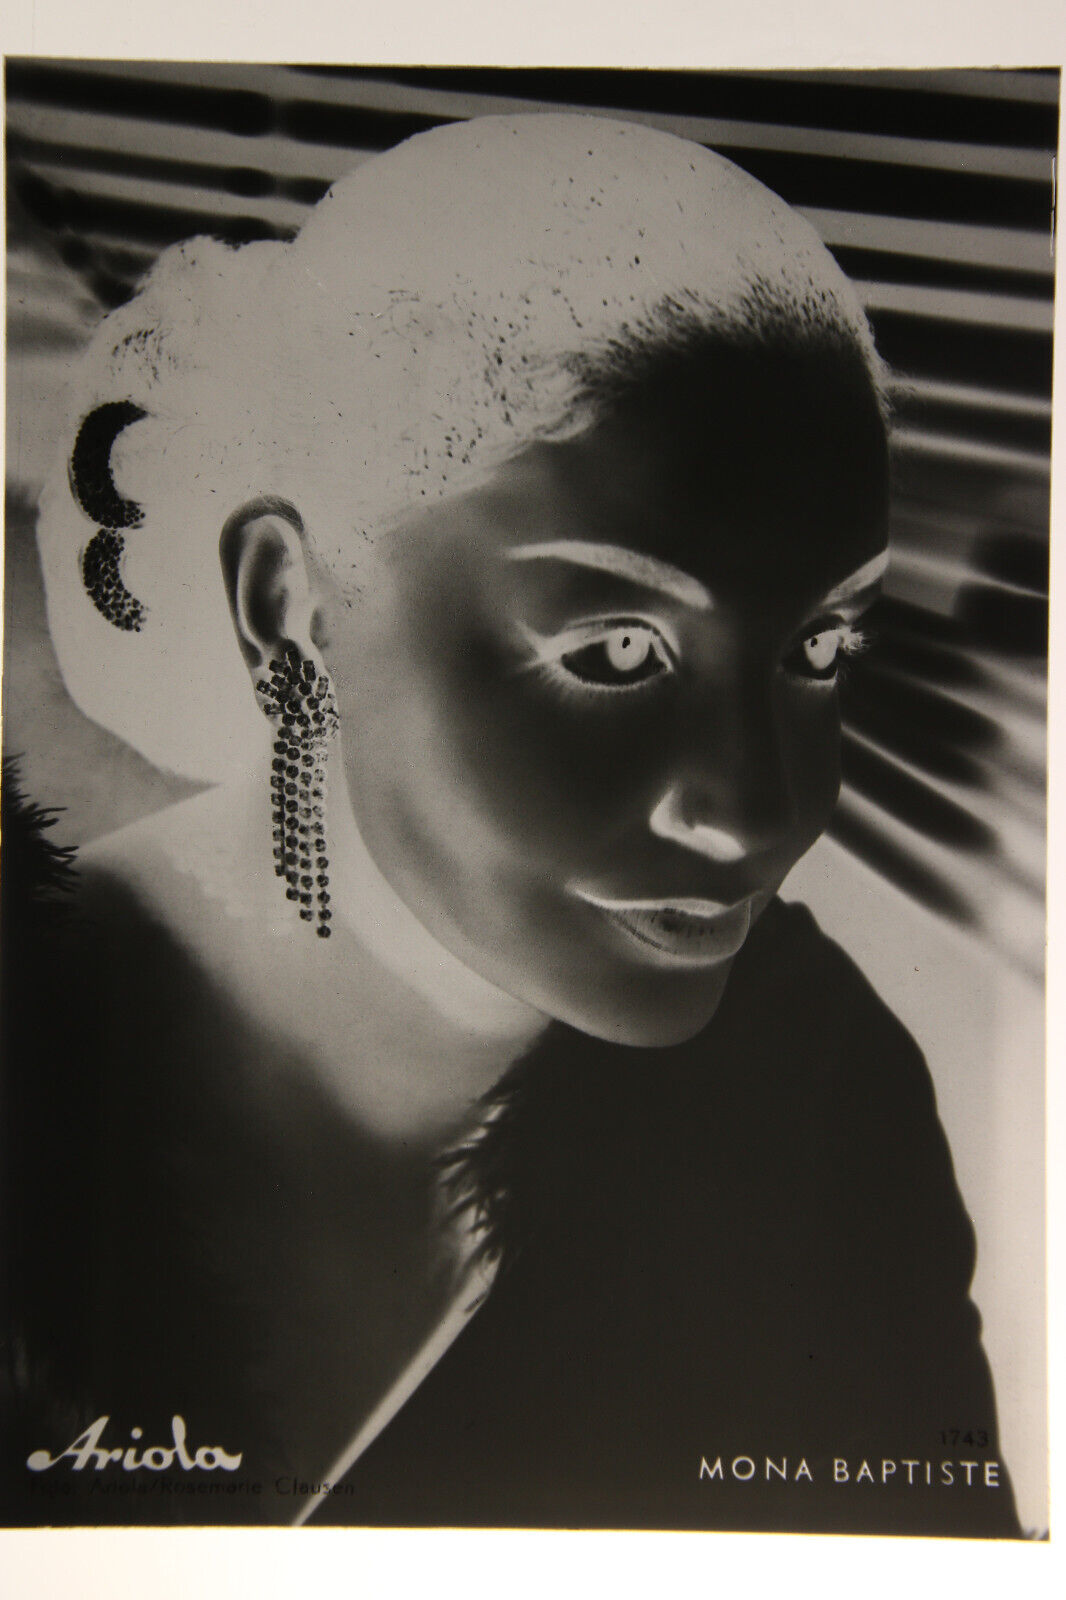 Vintage Glass Negative Mona Baptiste Trinidad and Tobago-born singer and actress